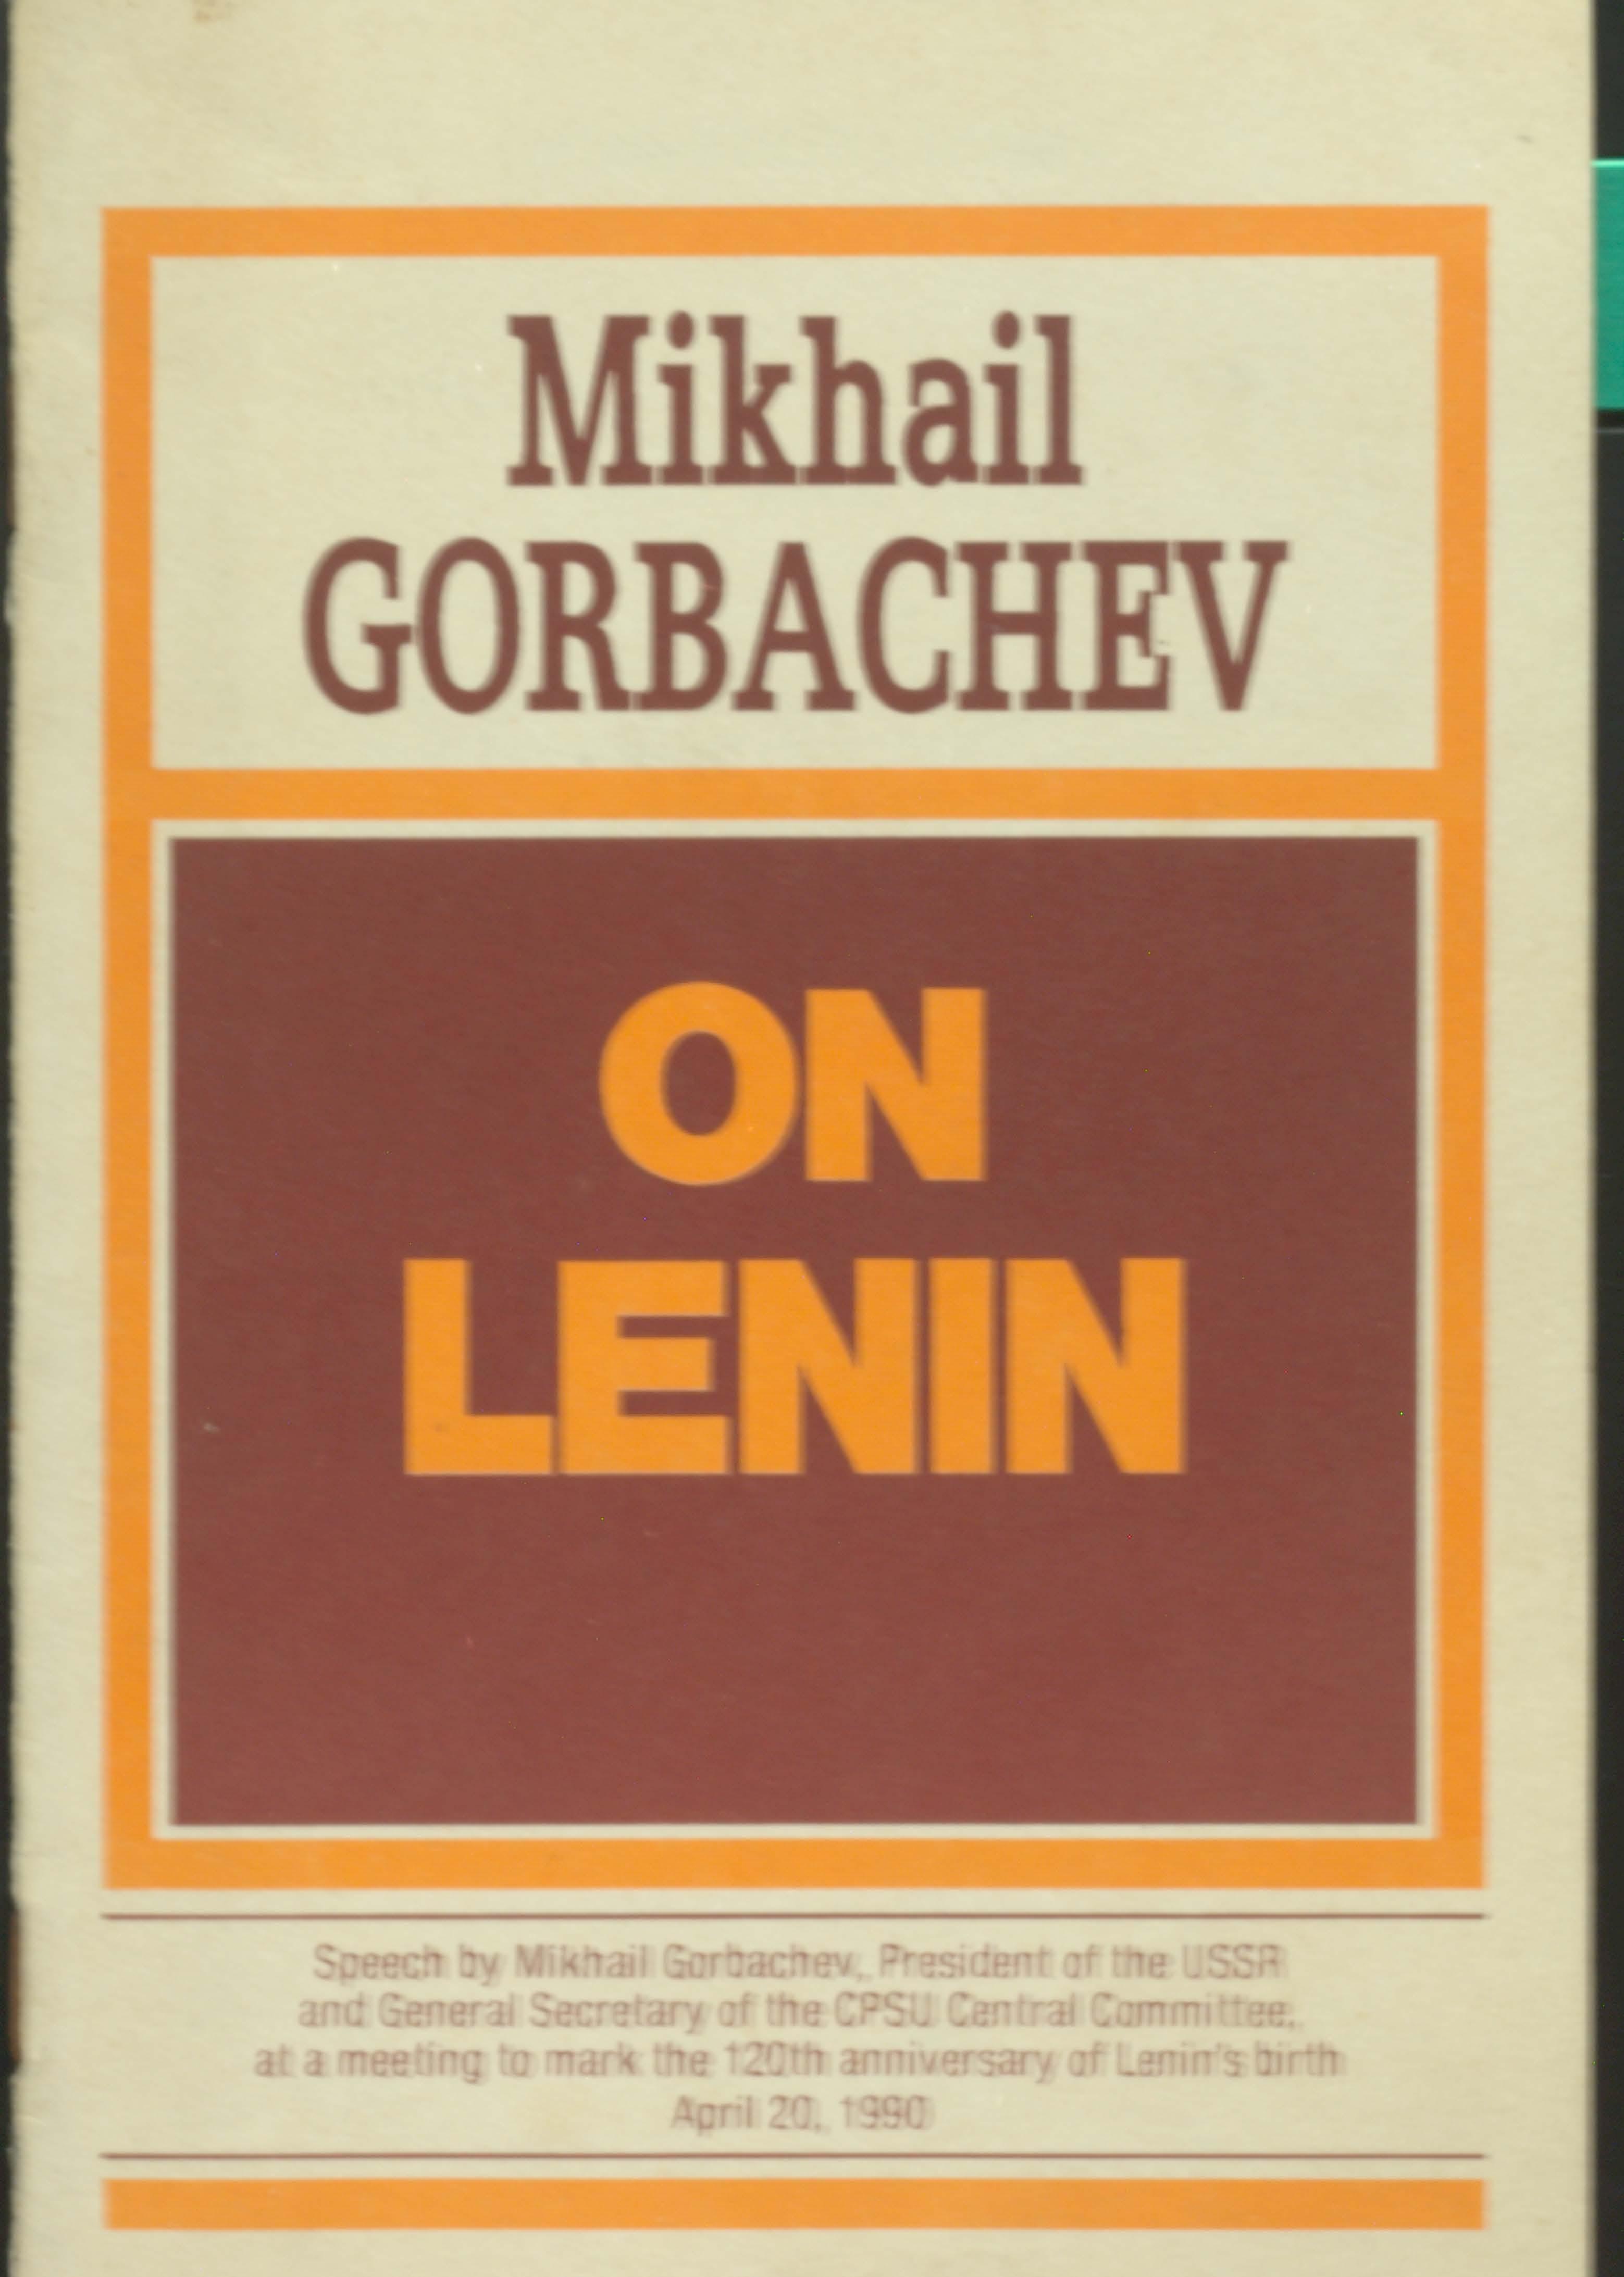 MIKHAIL GORBACHEV ON LENIN